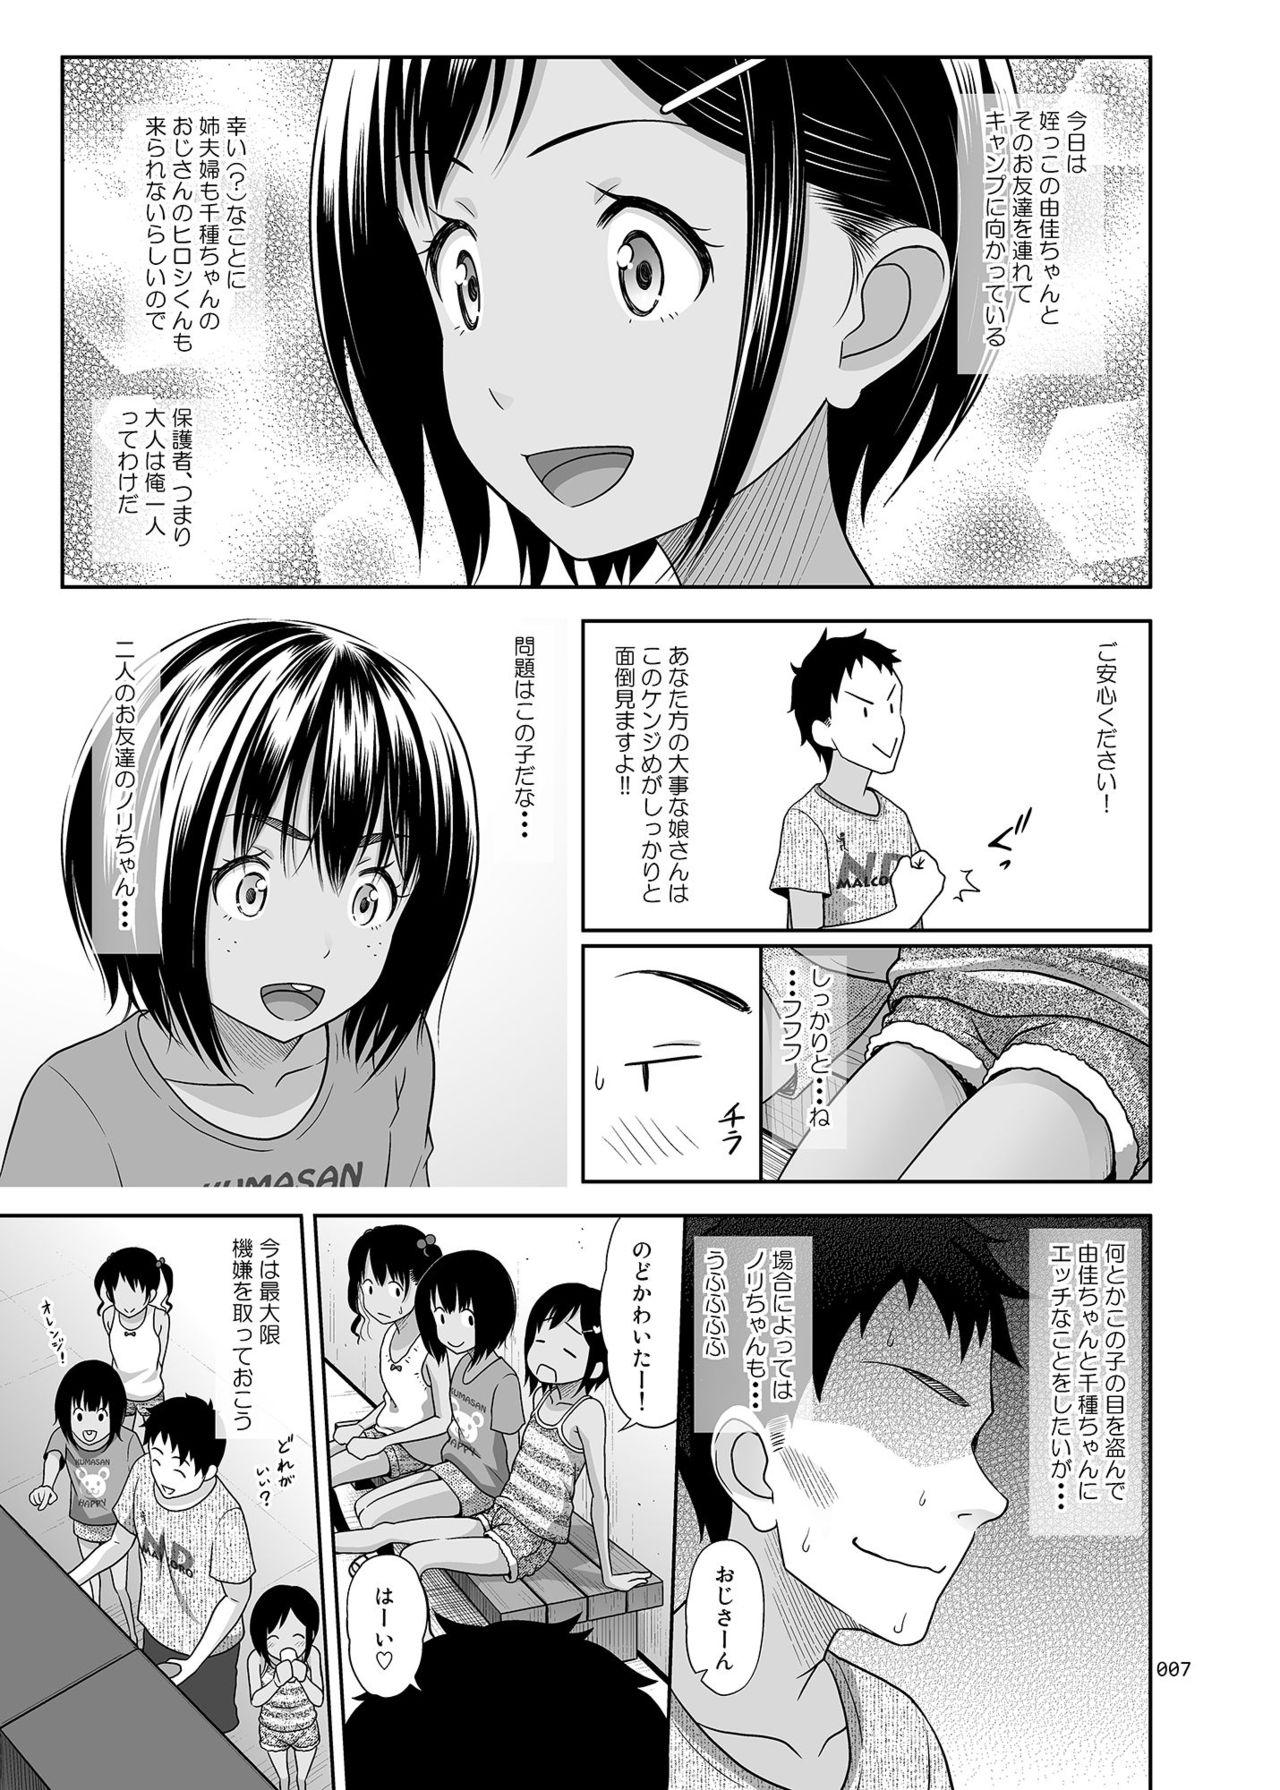 Small Meikko na Syoujo no Ehon 7 - Original Jacking - Page 6